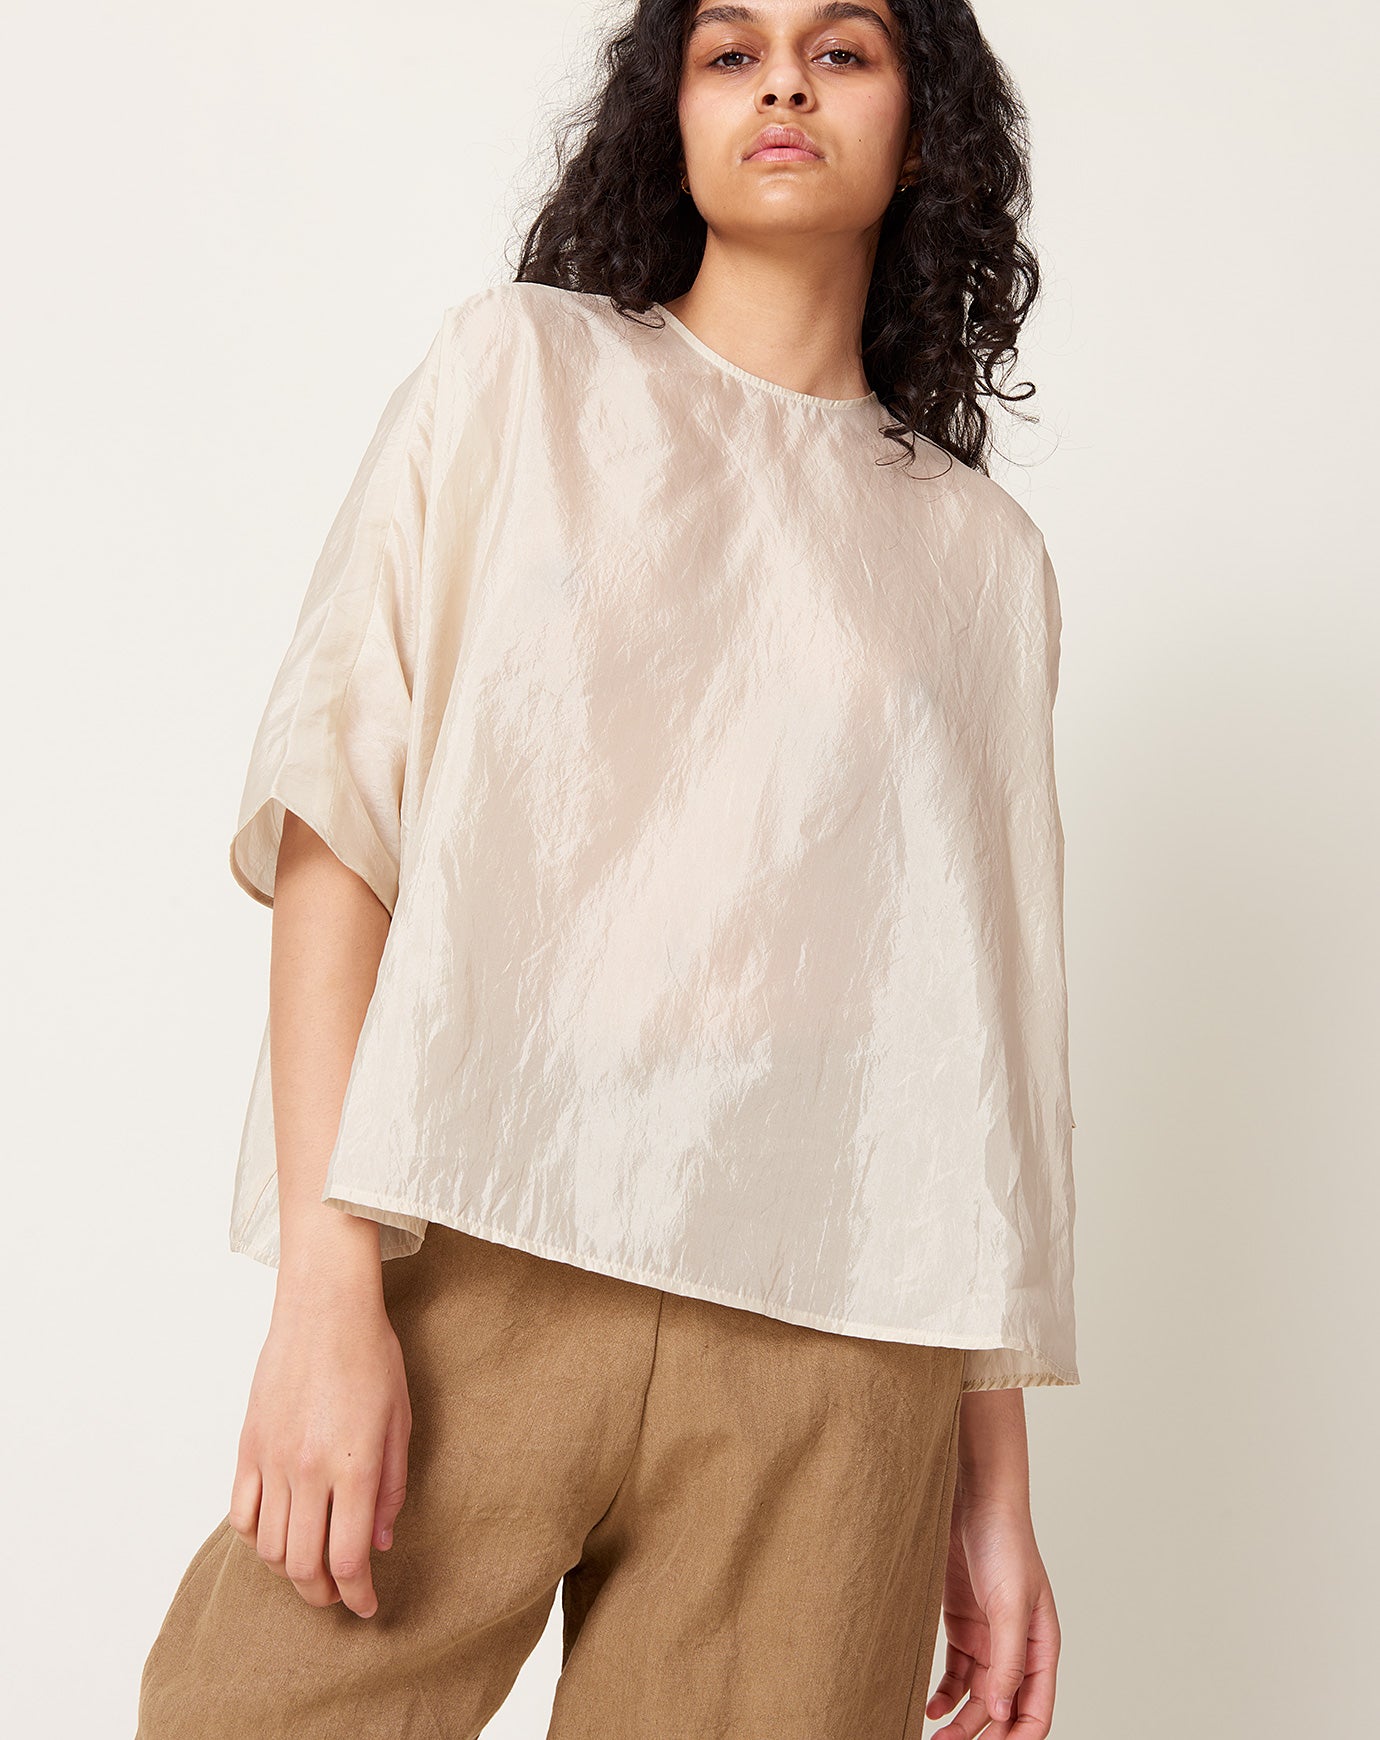 apuntob Silk Organza Shirt in Natural